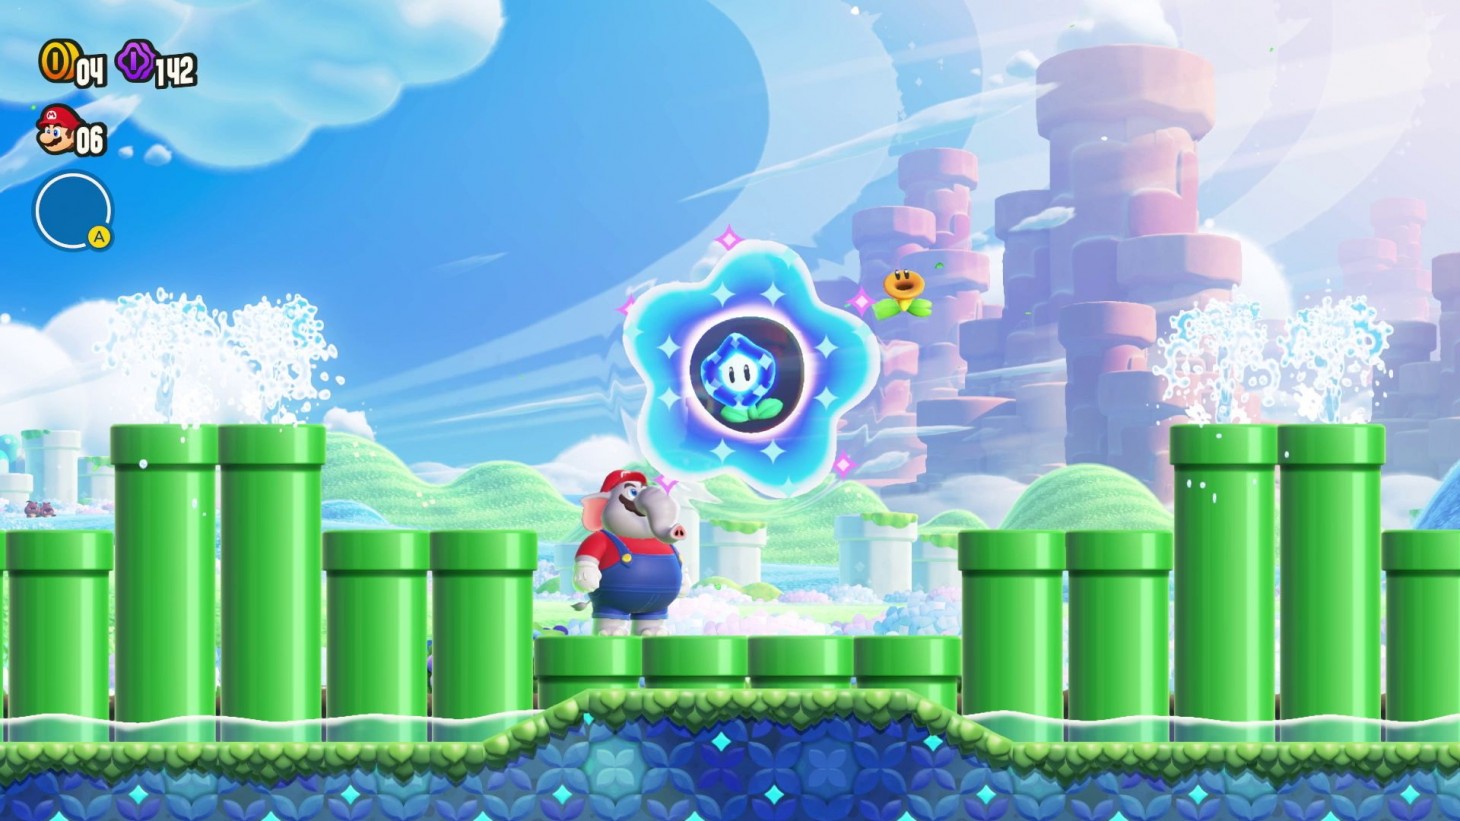 Super Mario Bros. Wonder' Review Roundup